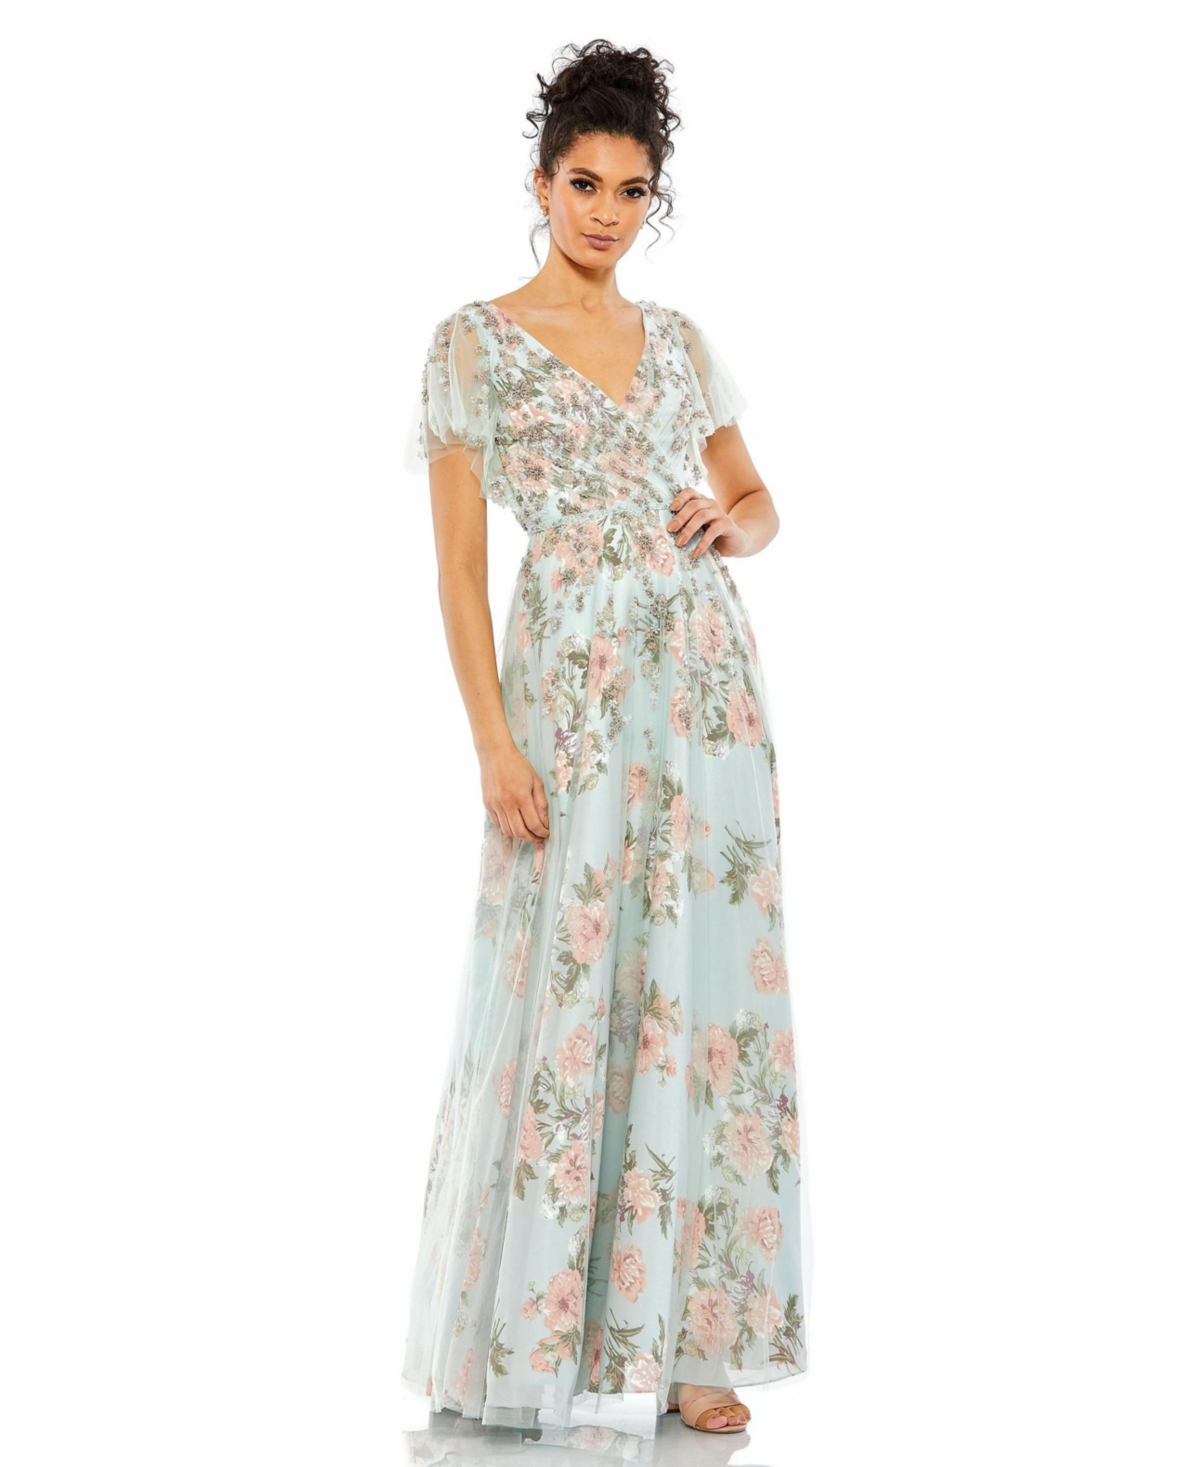 Great Gatsby Dress – Great Gatsby Dresses for Sale Womens Floral Flutter Sleeve V-Neck Maxi Dress - Blue multi $458.00 AT vintagedancer.com